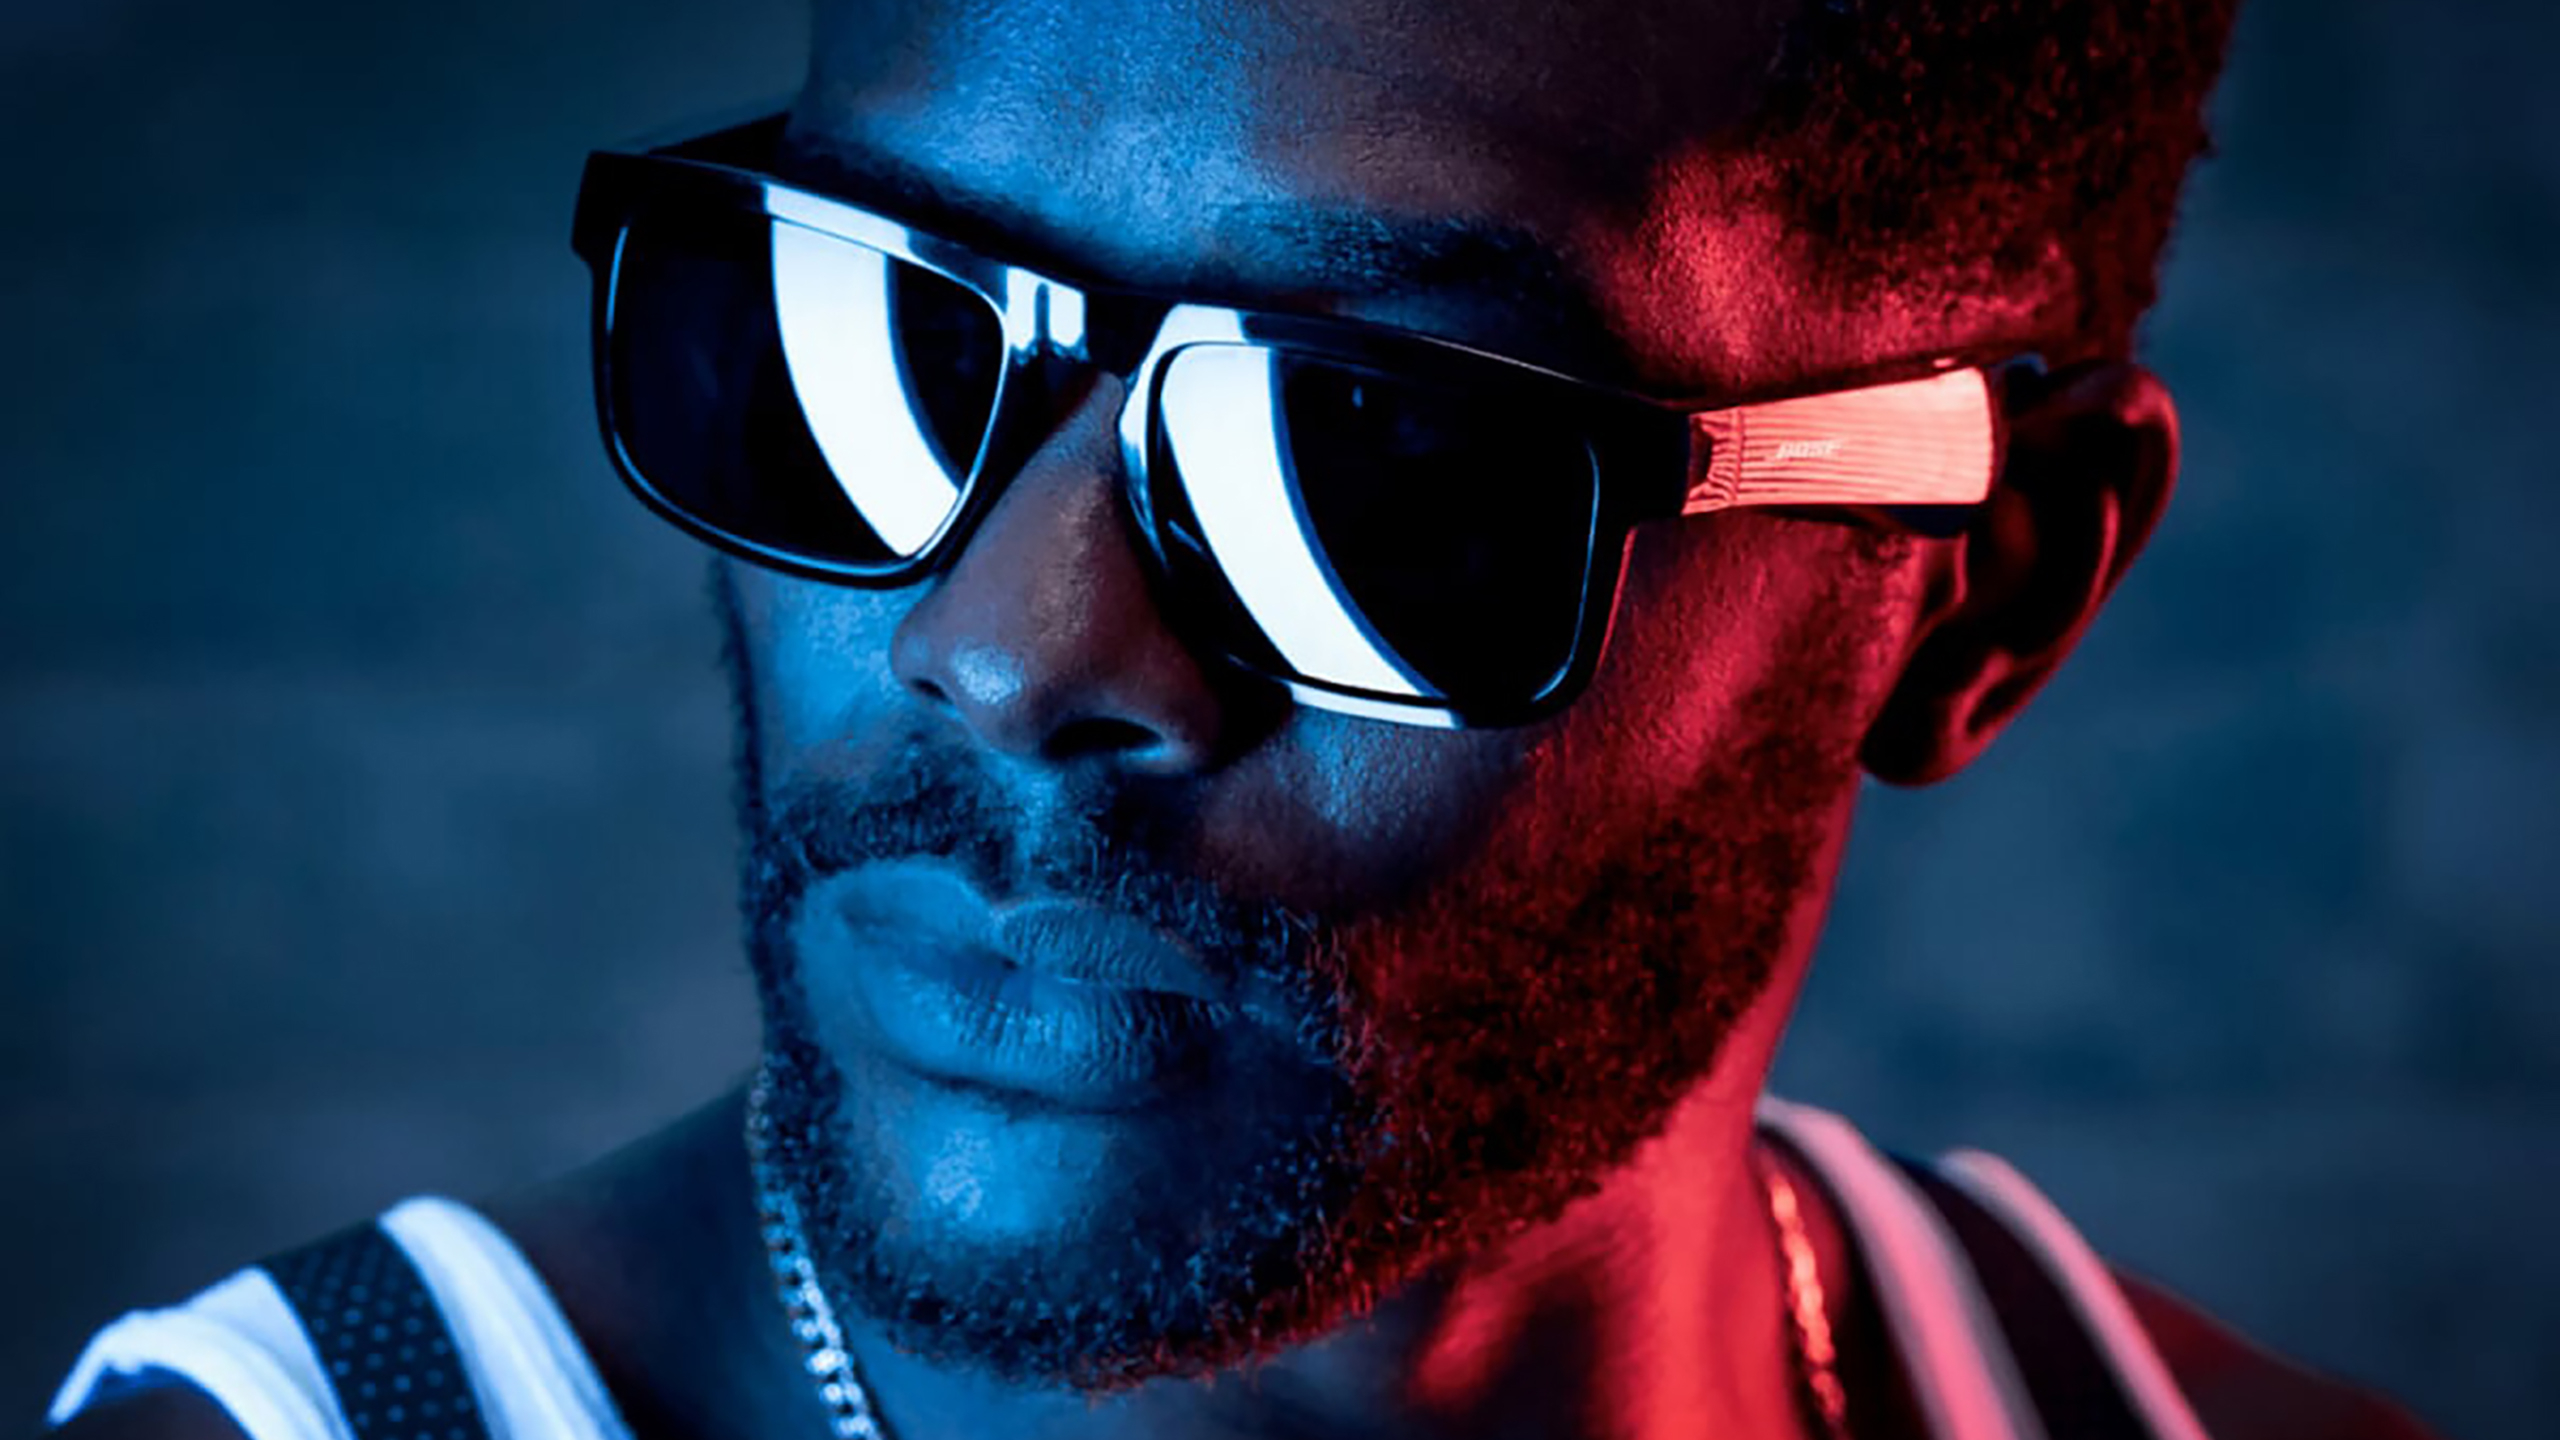 man wearing Bose sunglasses at night